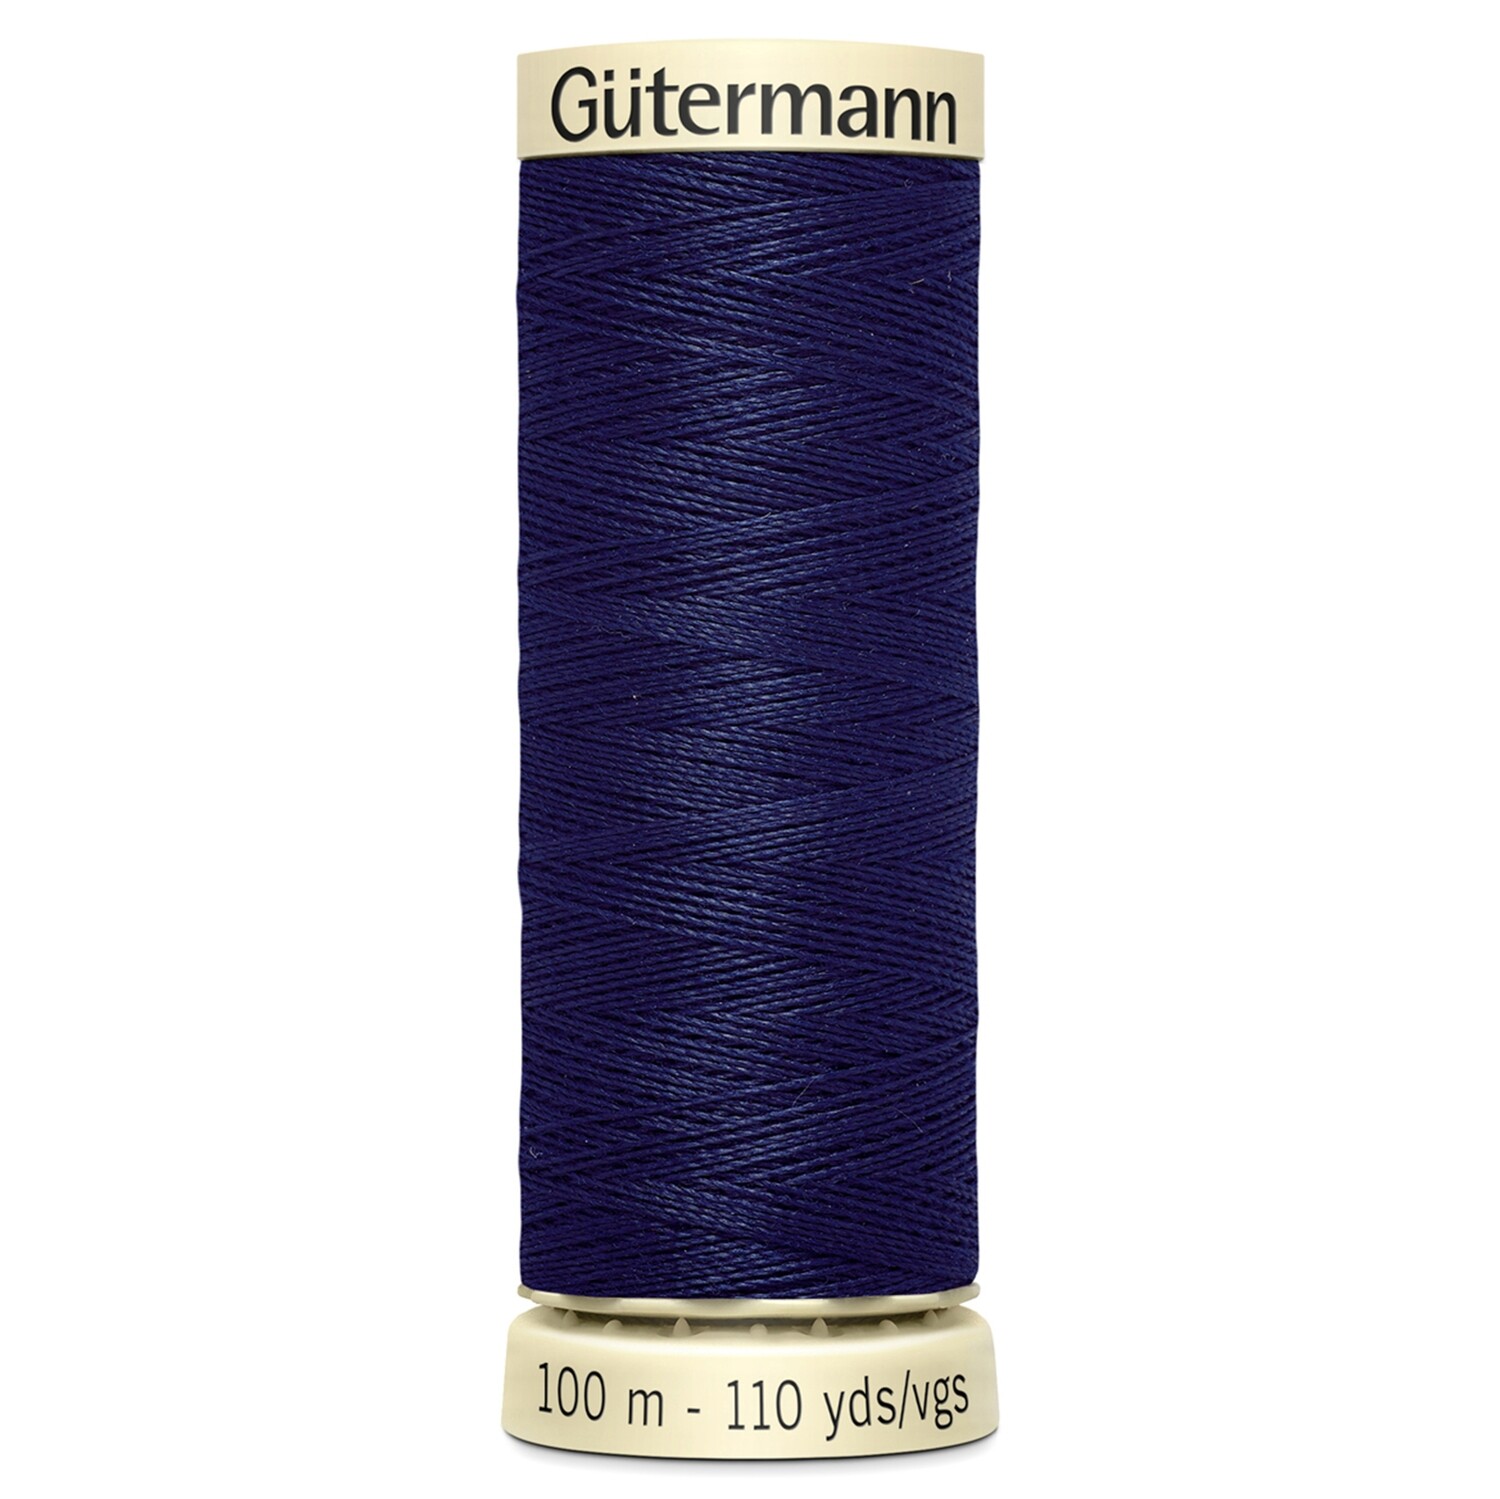 Gutermann Sew-All thread 310